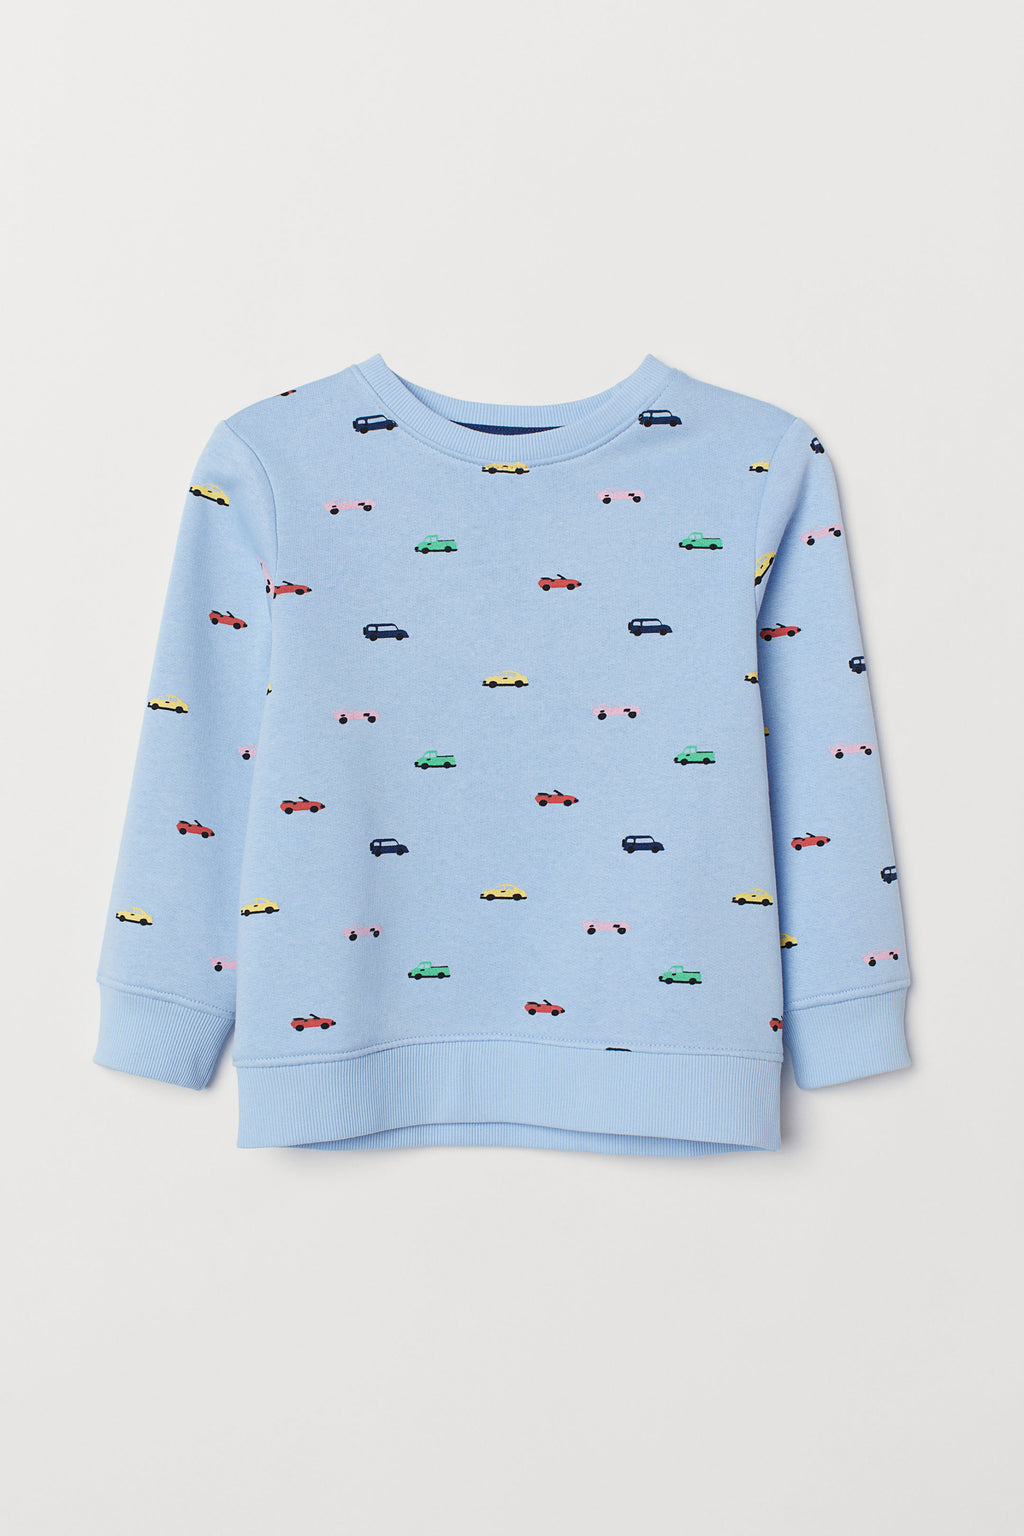 Buzo H&M Sweatshirt with Printed Design